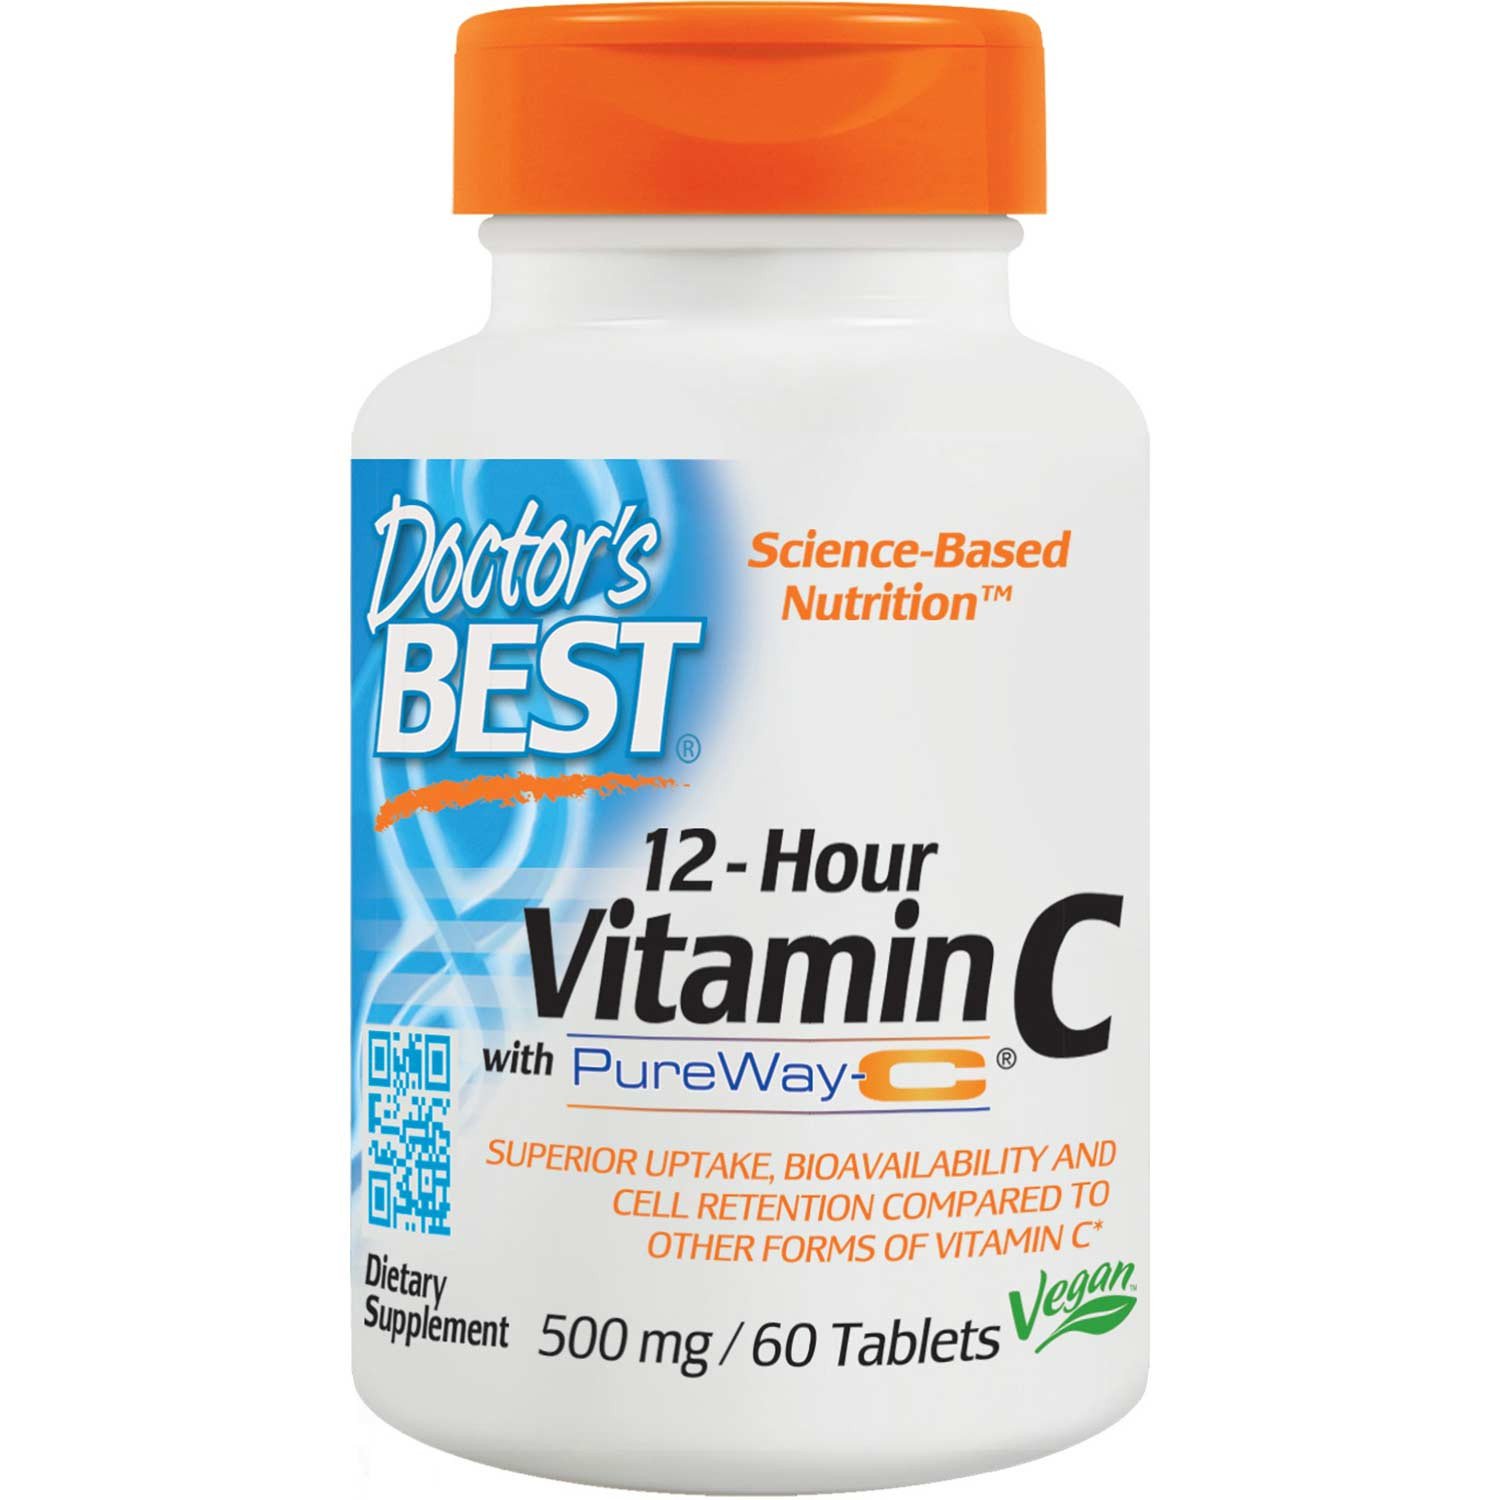 Doctor's Best 12-Hour Vitamin C with PureWay-C, 60 tabs